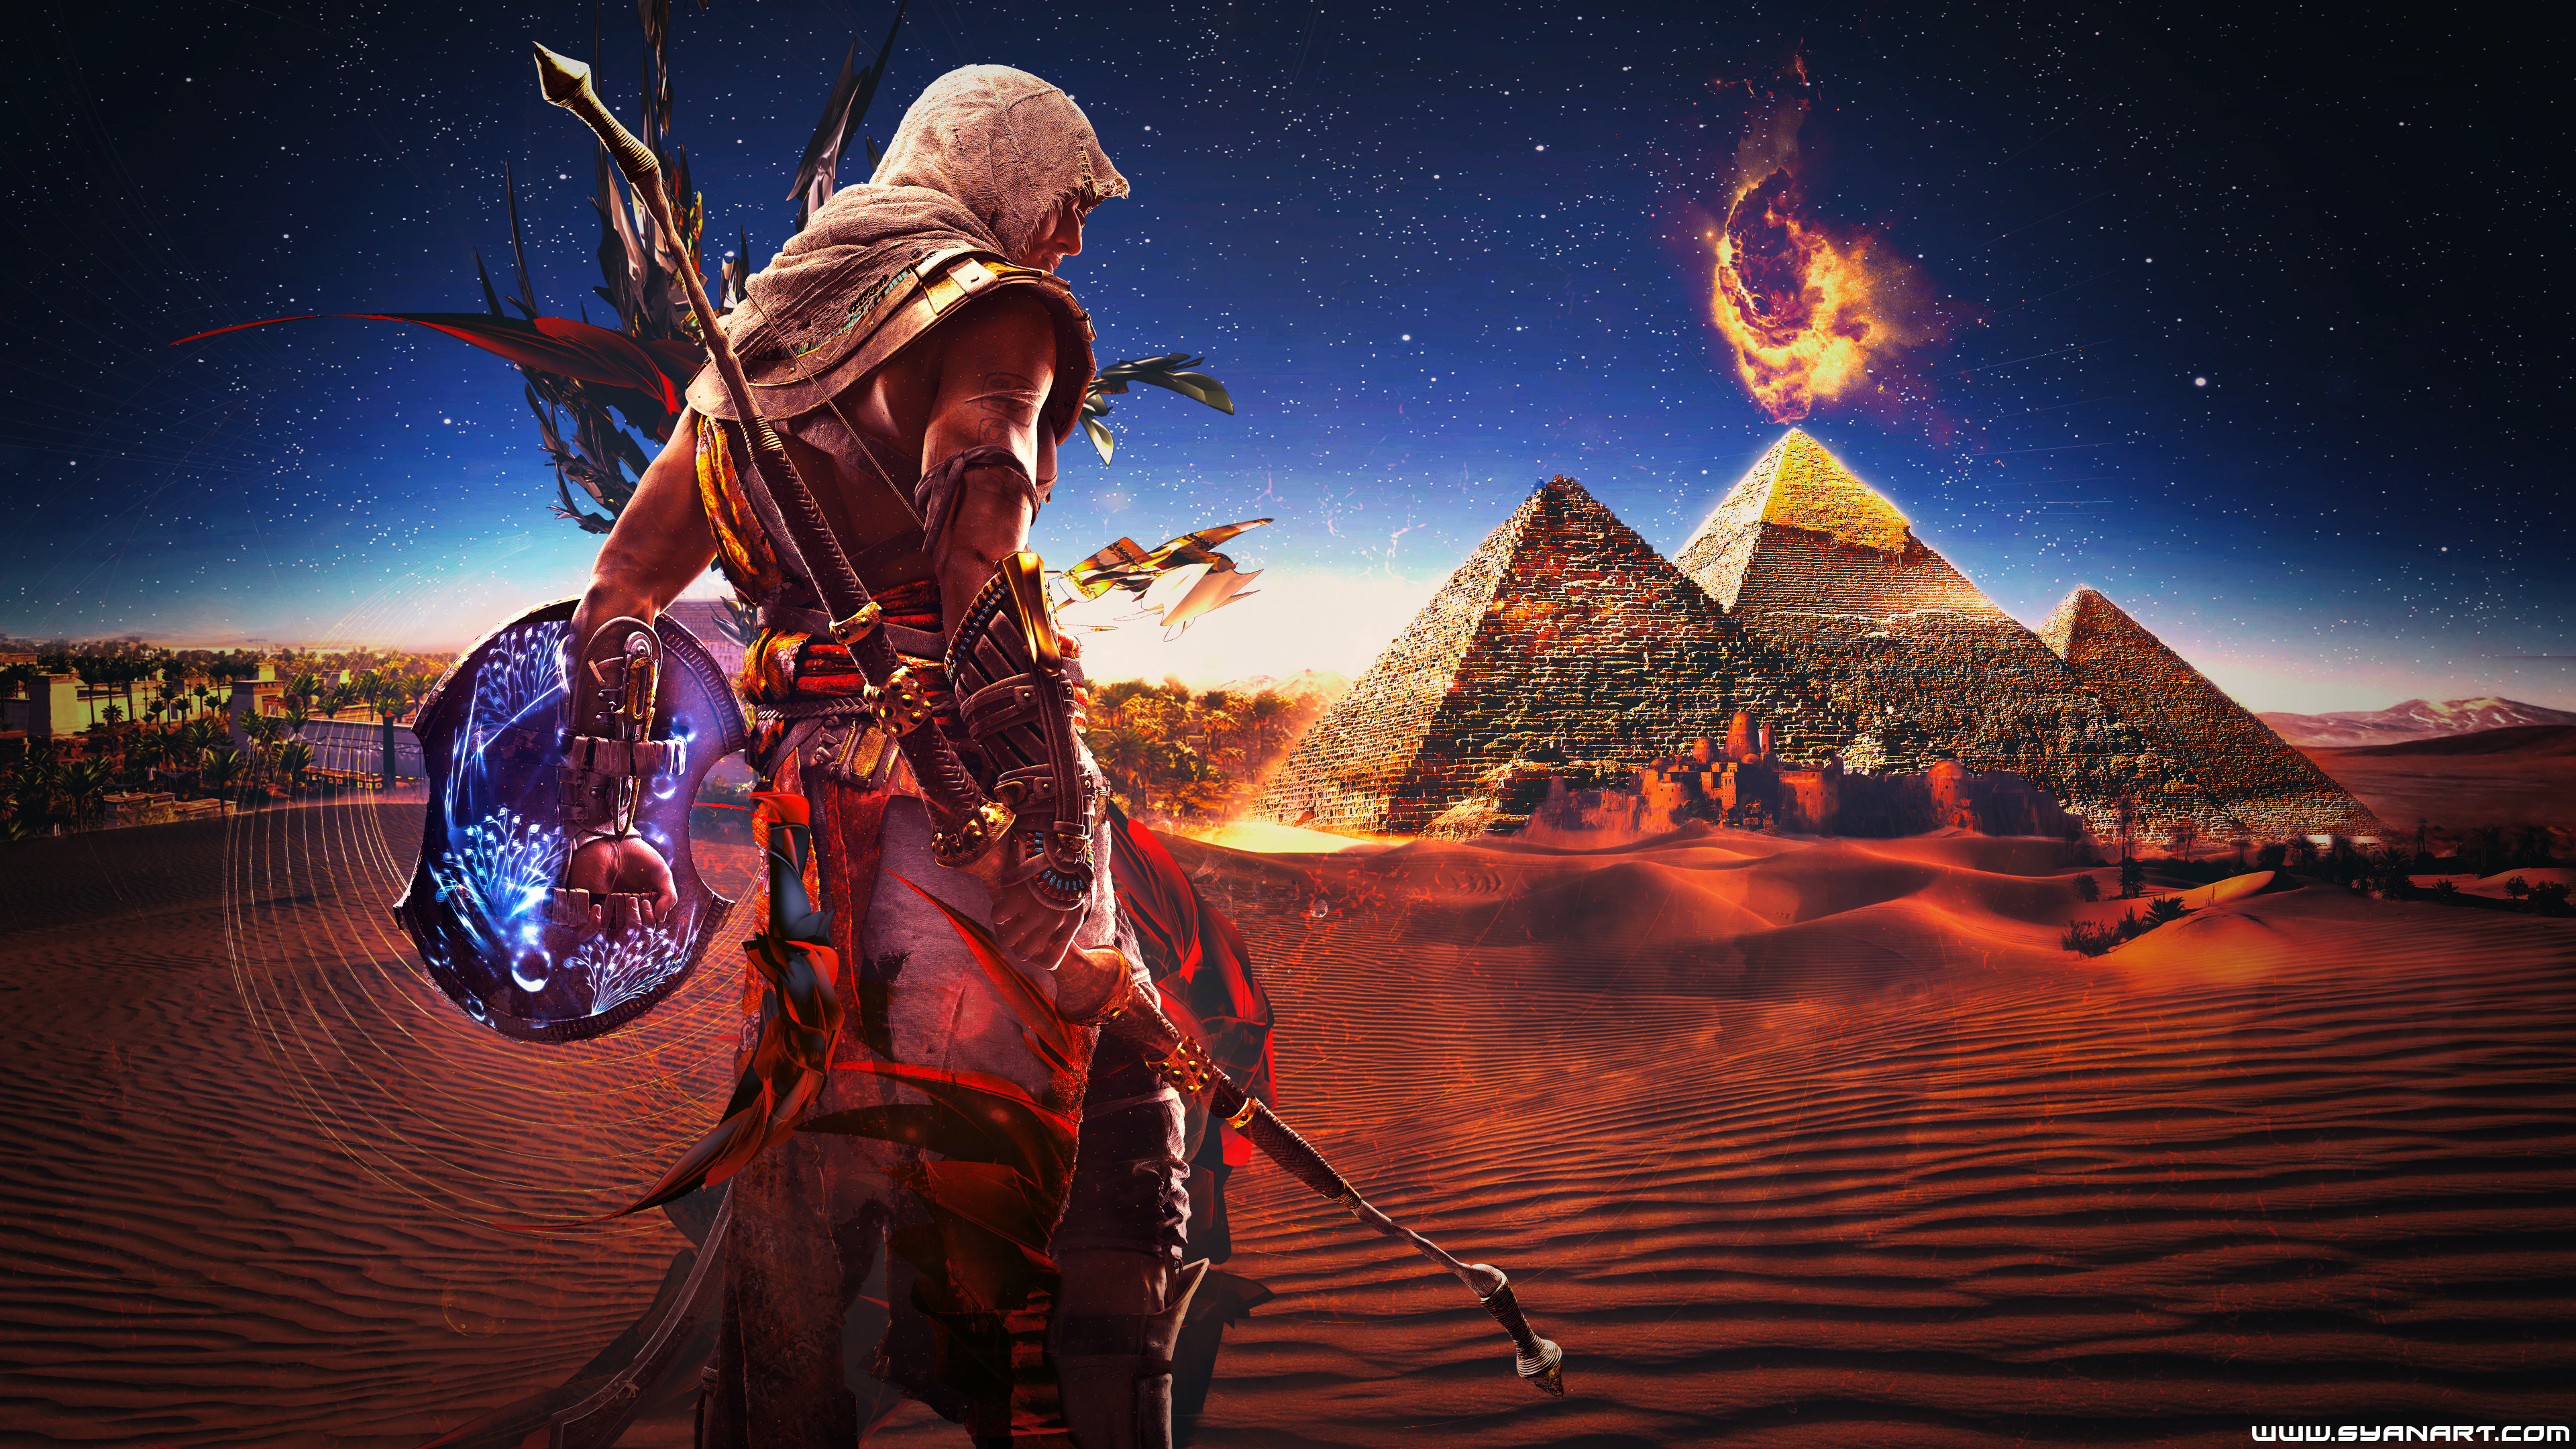 500912 descargar imagen assassin's creed, egipto, videojuego, assassin's creed: origins, bayek de siwa: fondos de pantalla y protectores de pantalla gratis